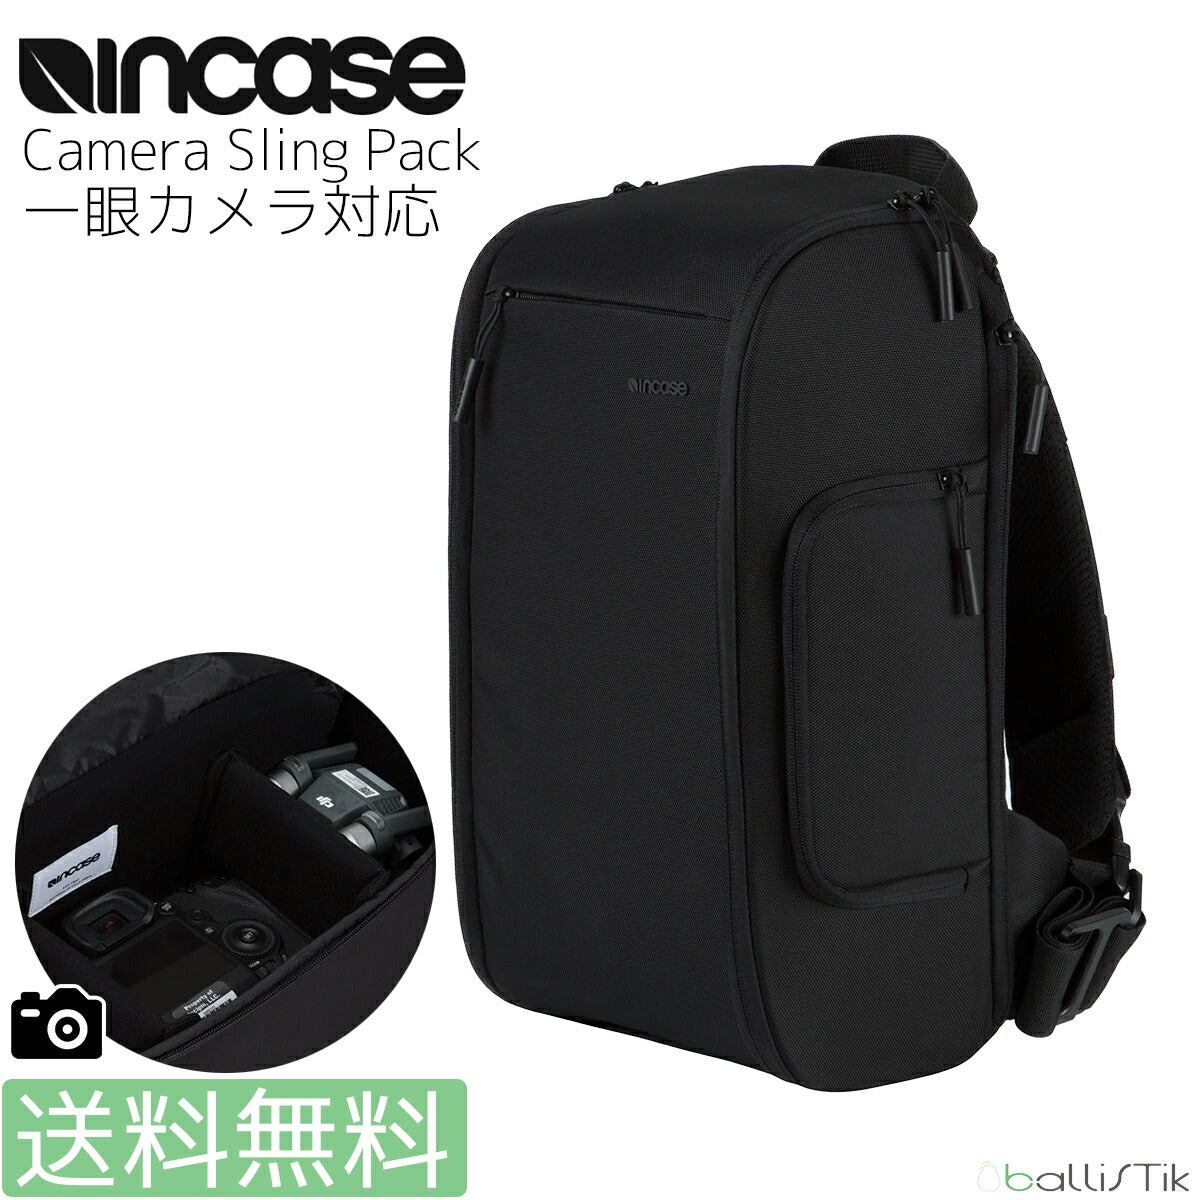 Incase インケース カメラバッグ Camera Sling Pack 37191016 